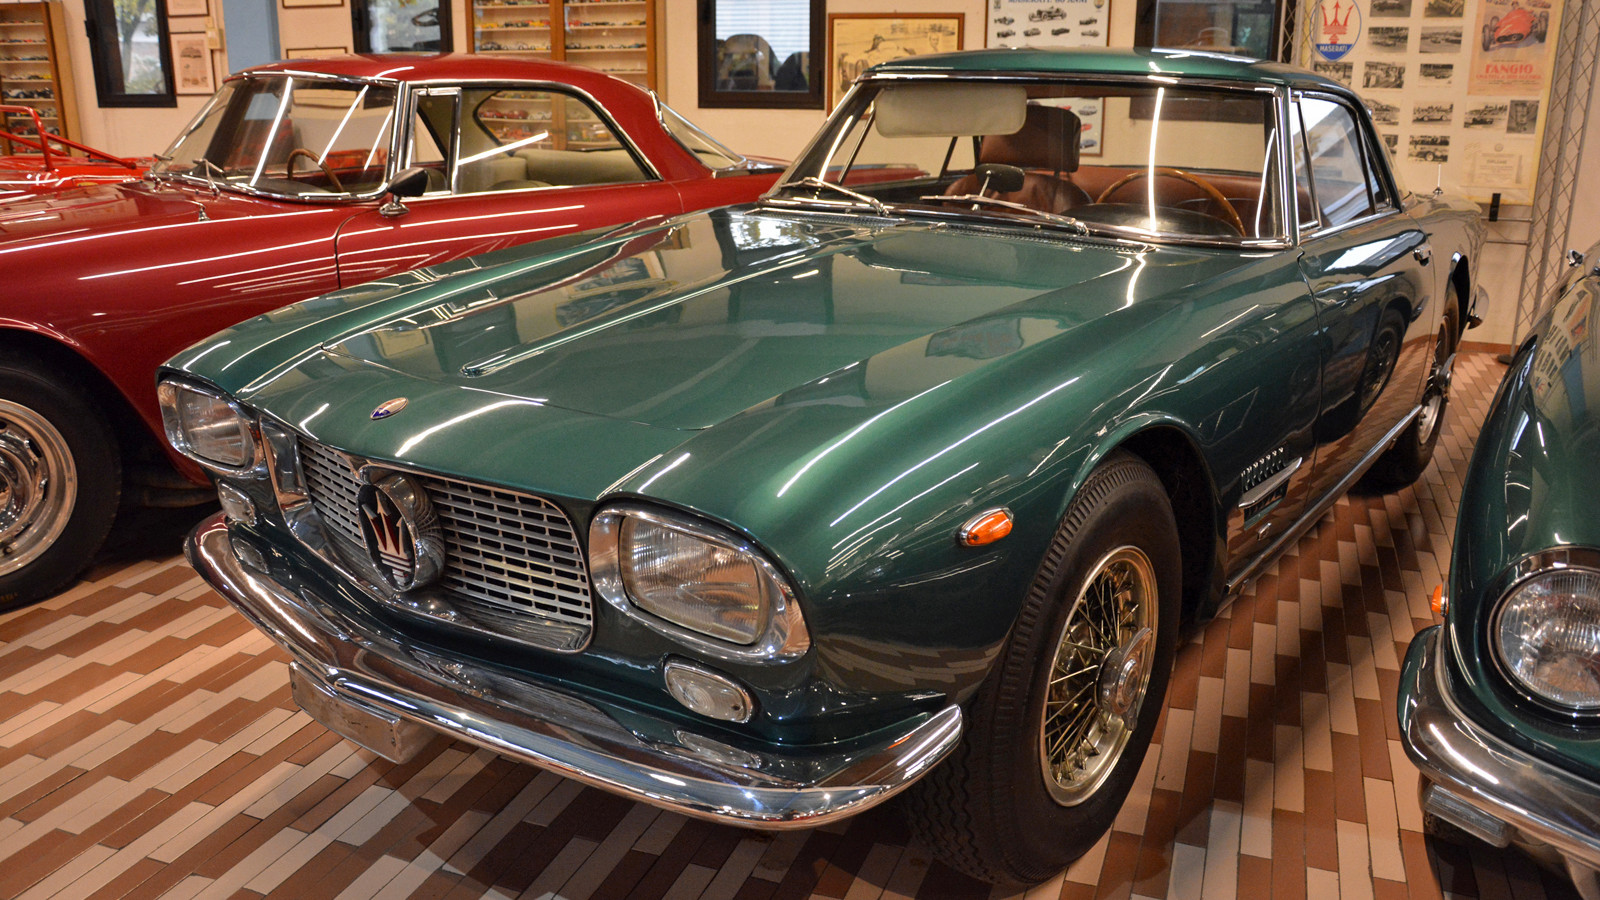 The Maserati treasures of the incredible Panini collection